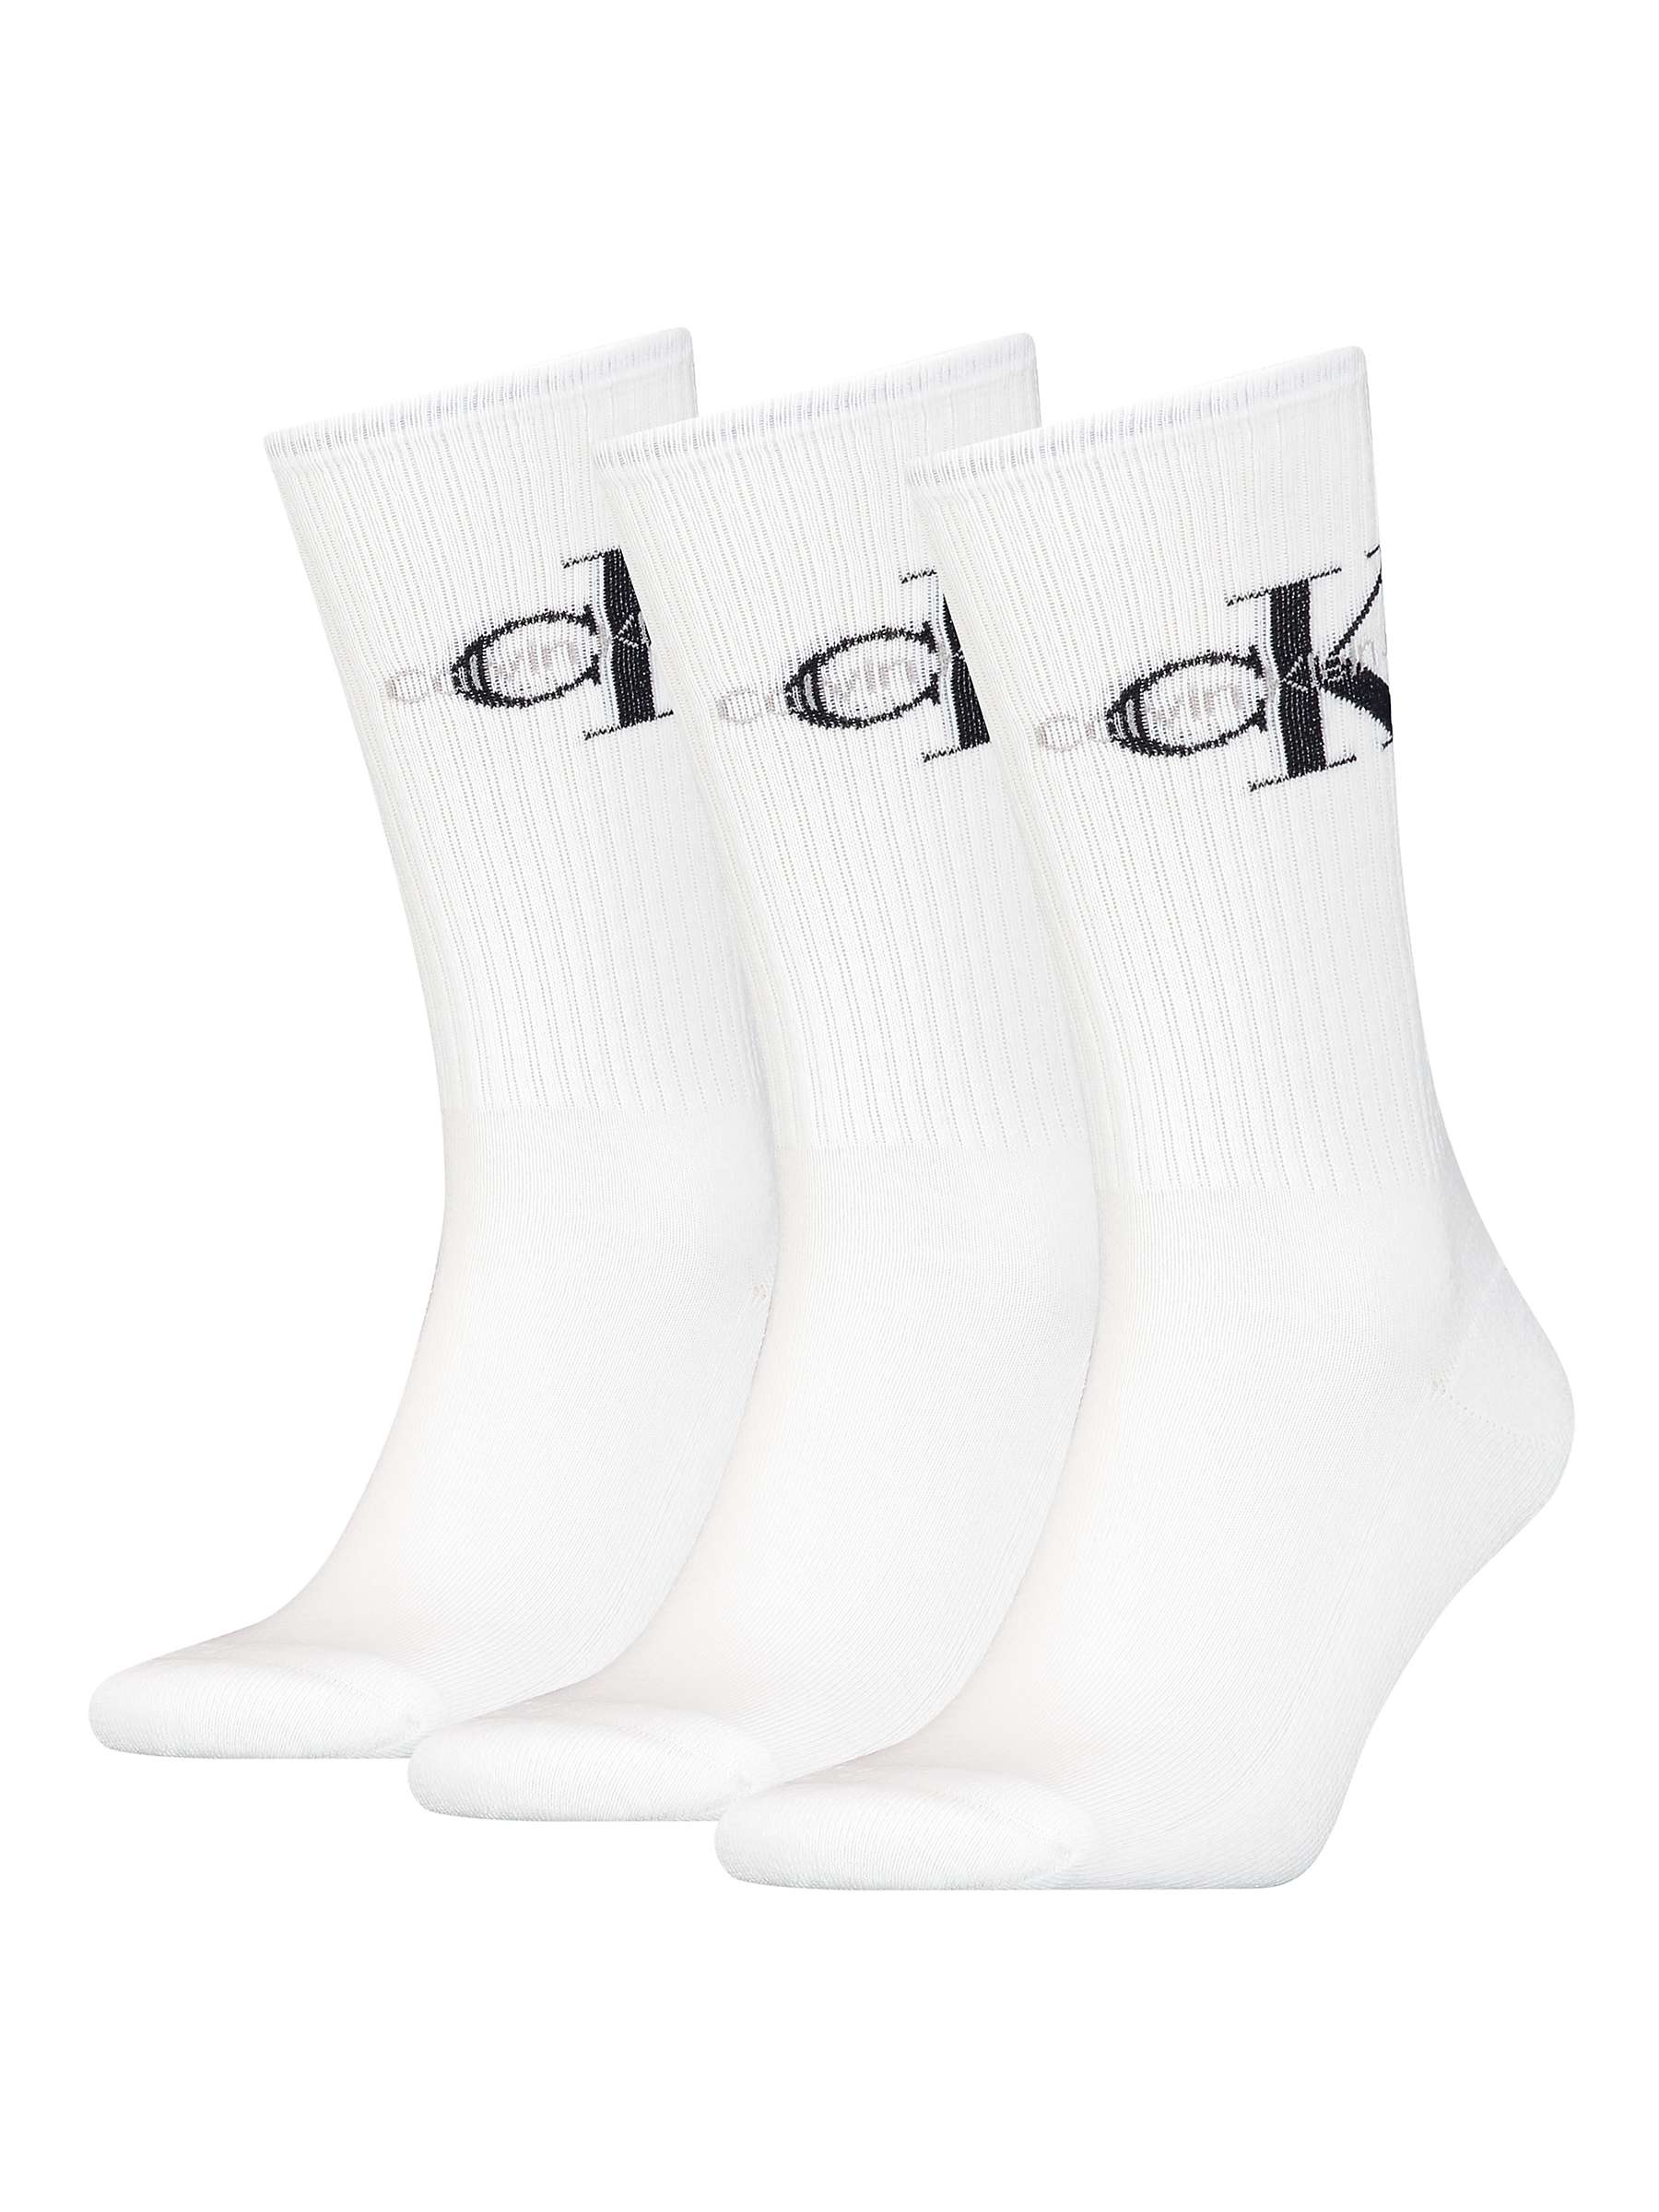 Buy Calvin Klein Jeans Desmond Logo Socks, One Size, Pack of 3, 001 White Online at johnlewis.com